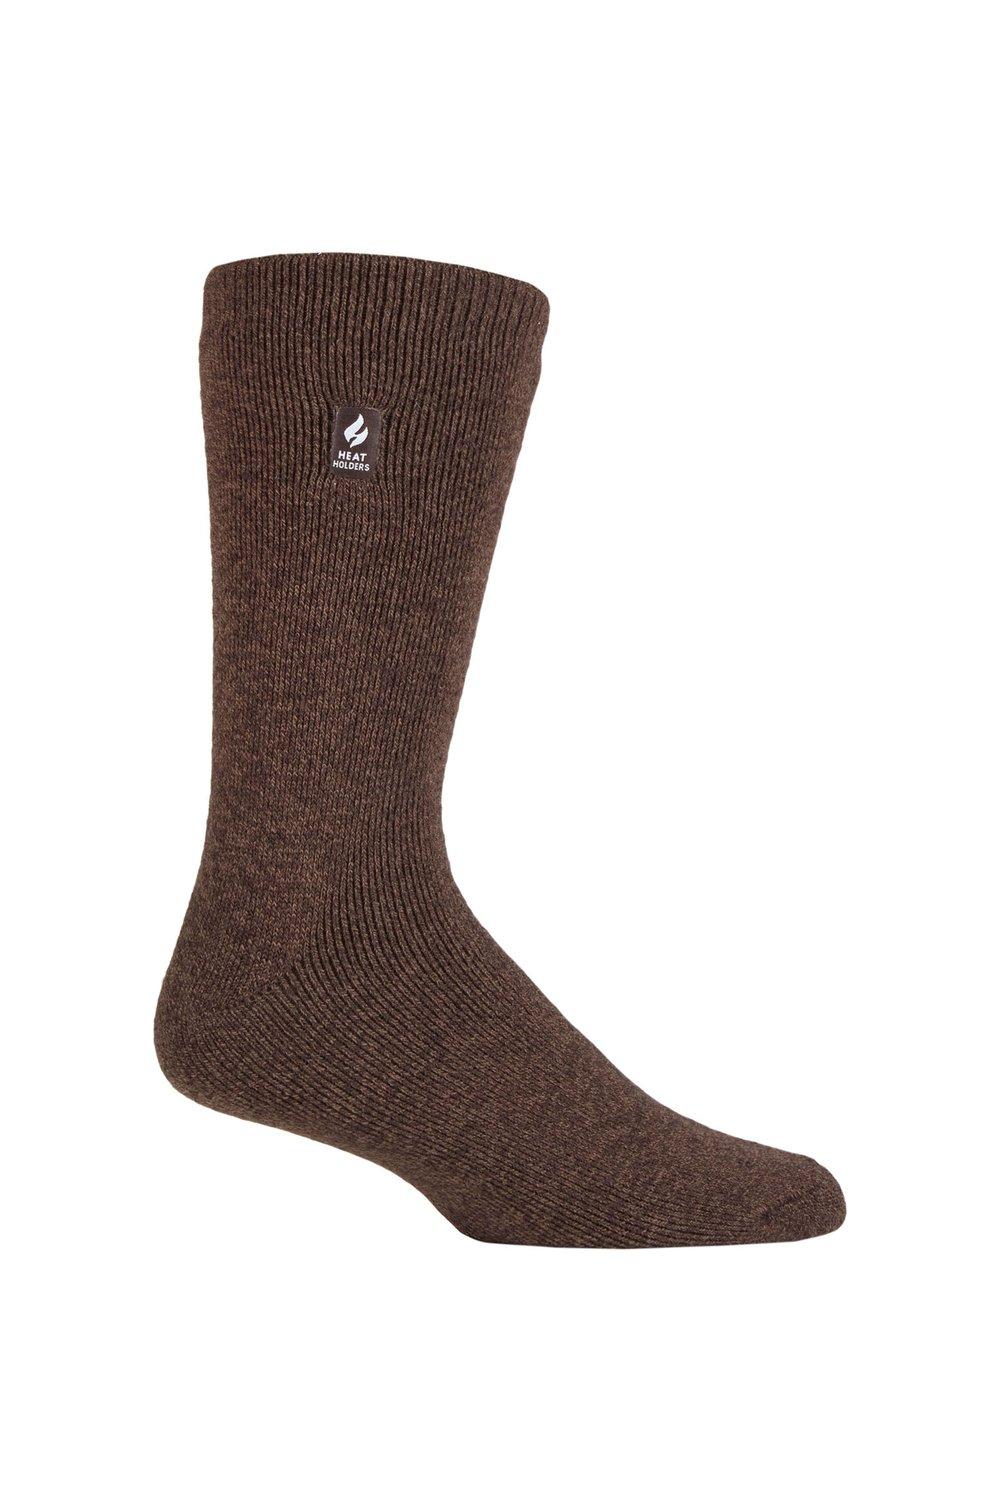 1 пара носков 1.6 TOG Lite SOCKSHOP Heat Holders, коричневый 1 pair mens winter wool socks thermal warm socks soft socks hiking socks